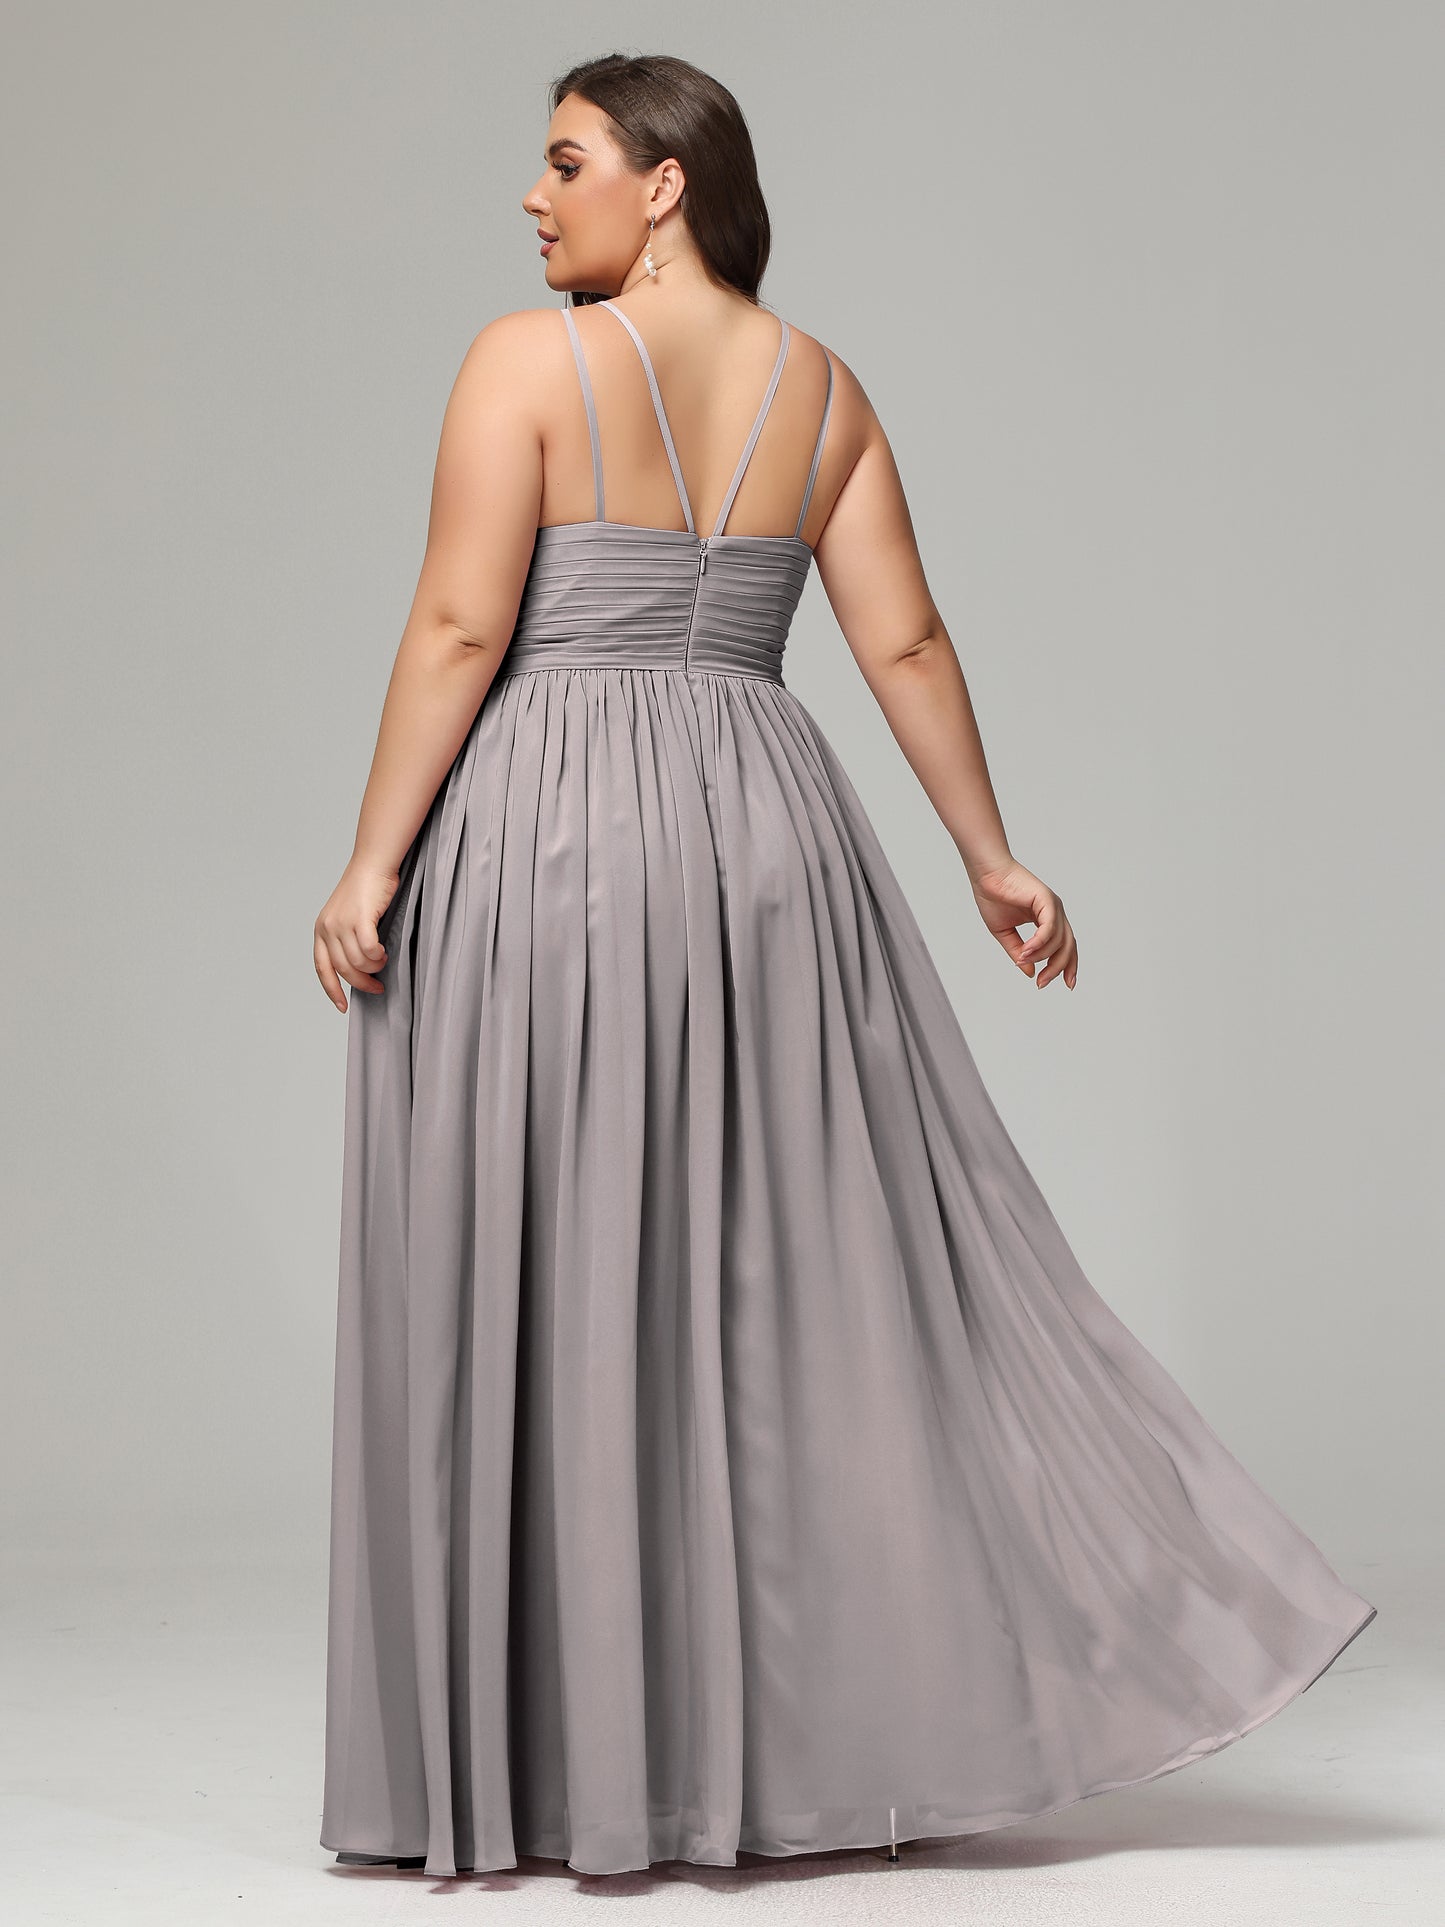 Halter & Straps on back Chiffon Bridesmaid Dress Plus Size